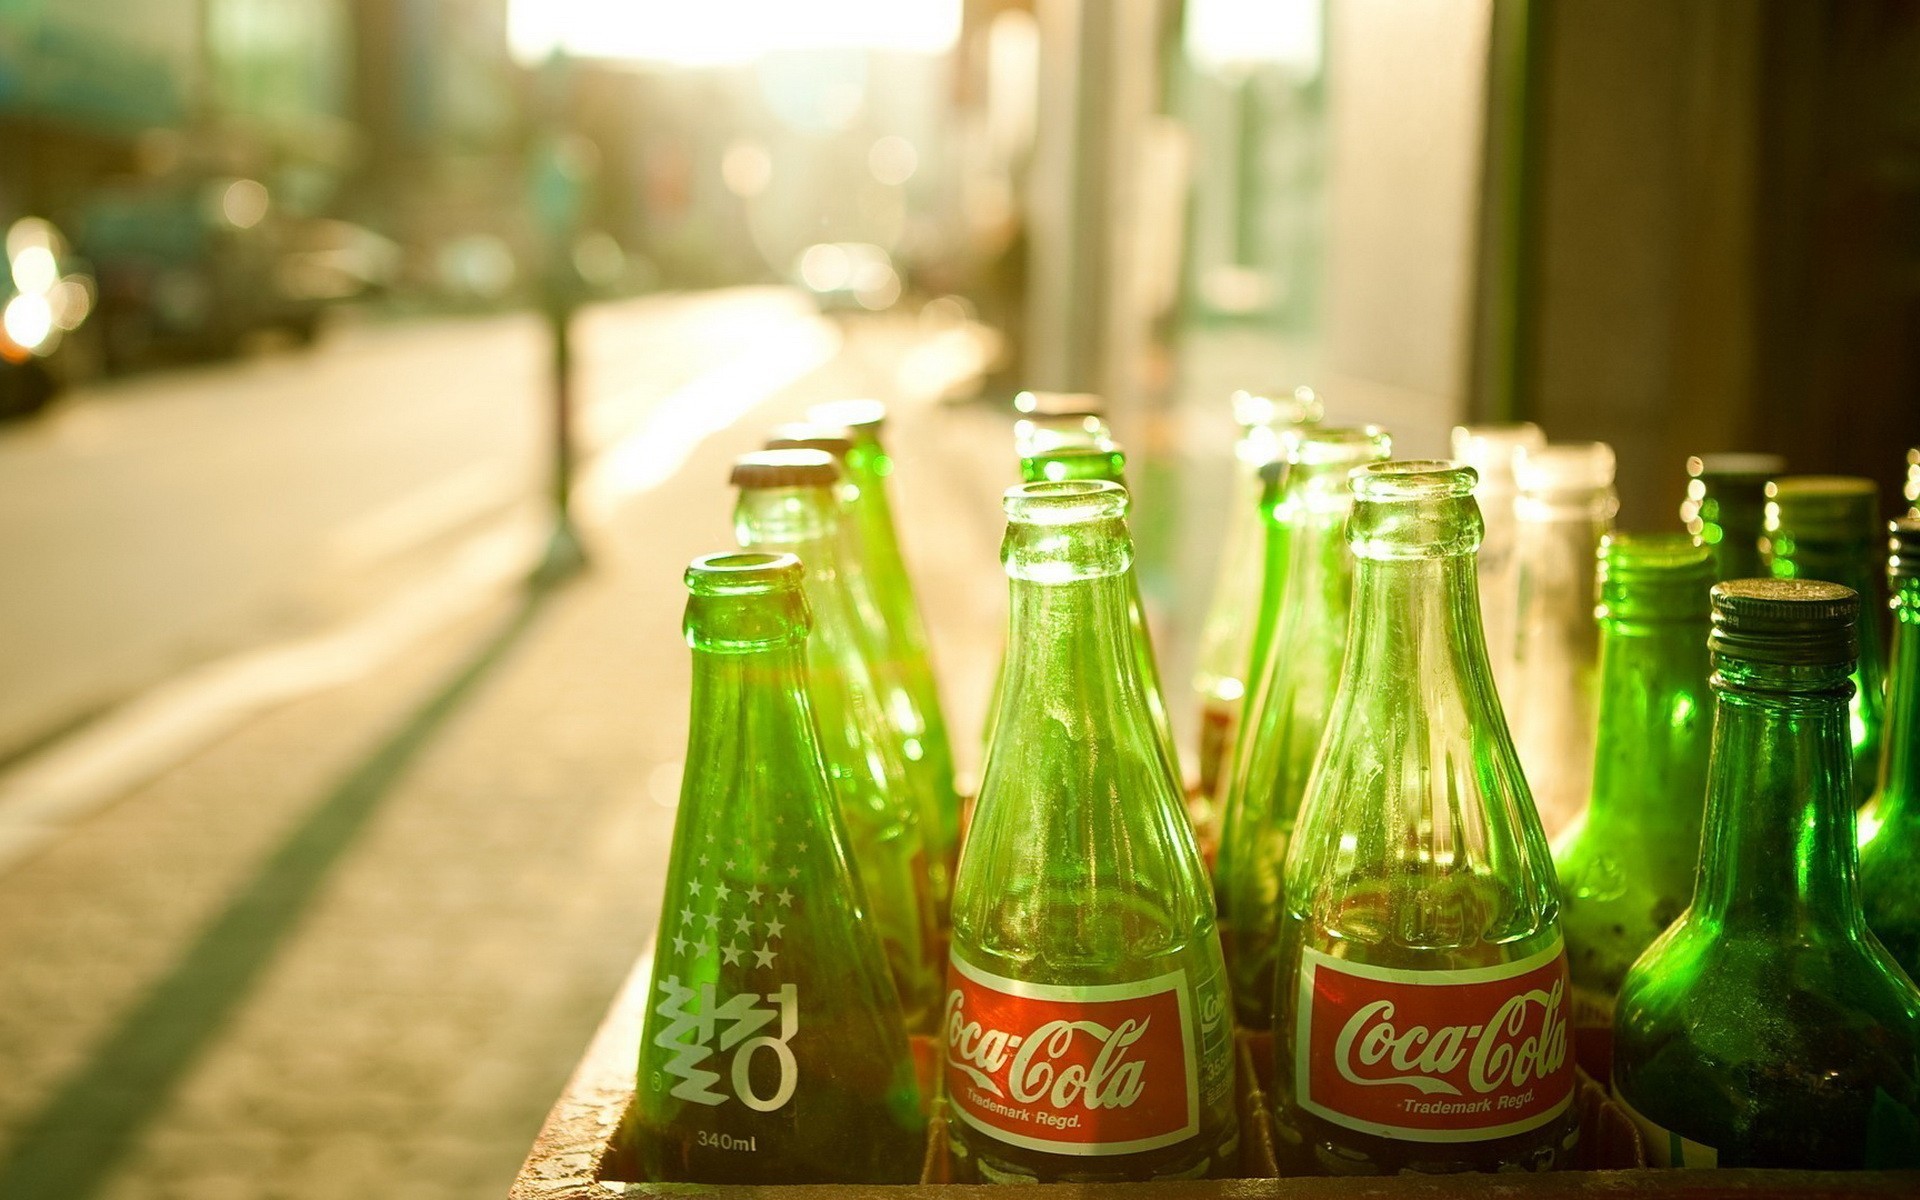 General 1920x1200 Coca-Cola bottles urban logo city outdoors green sunlight street brand